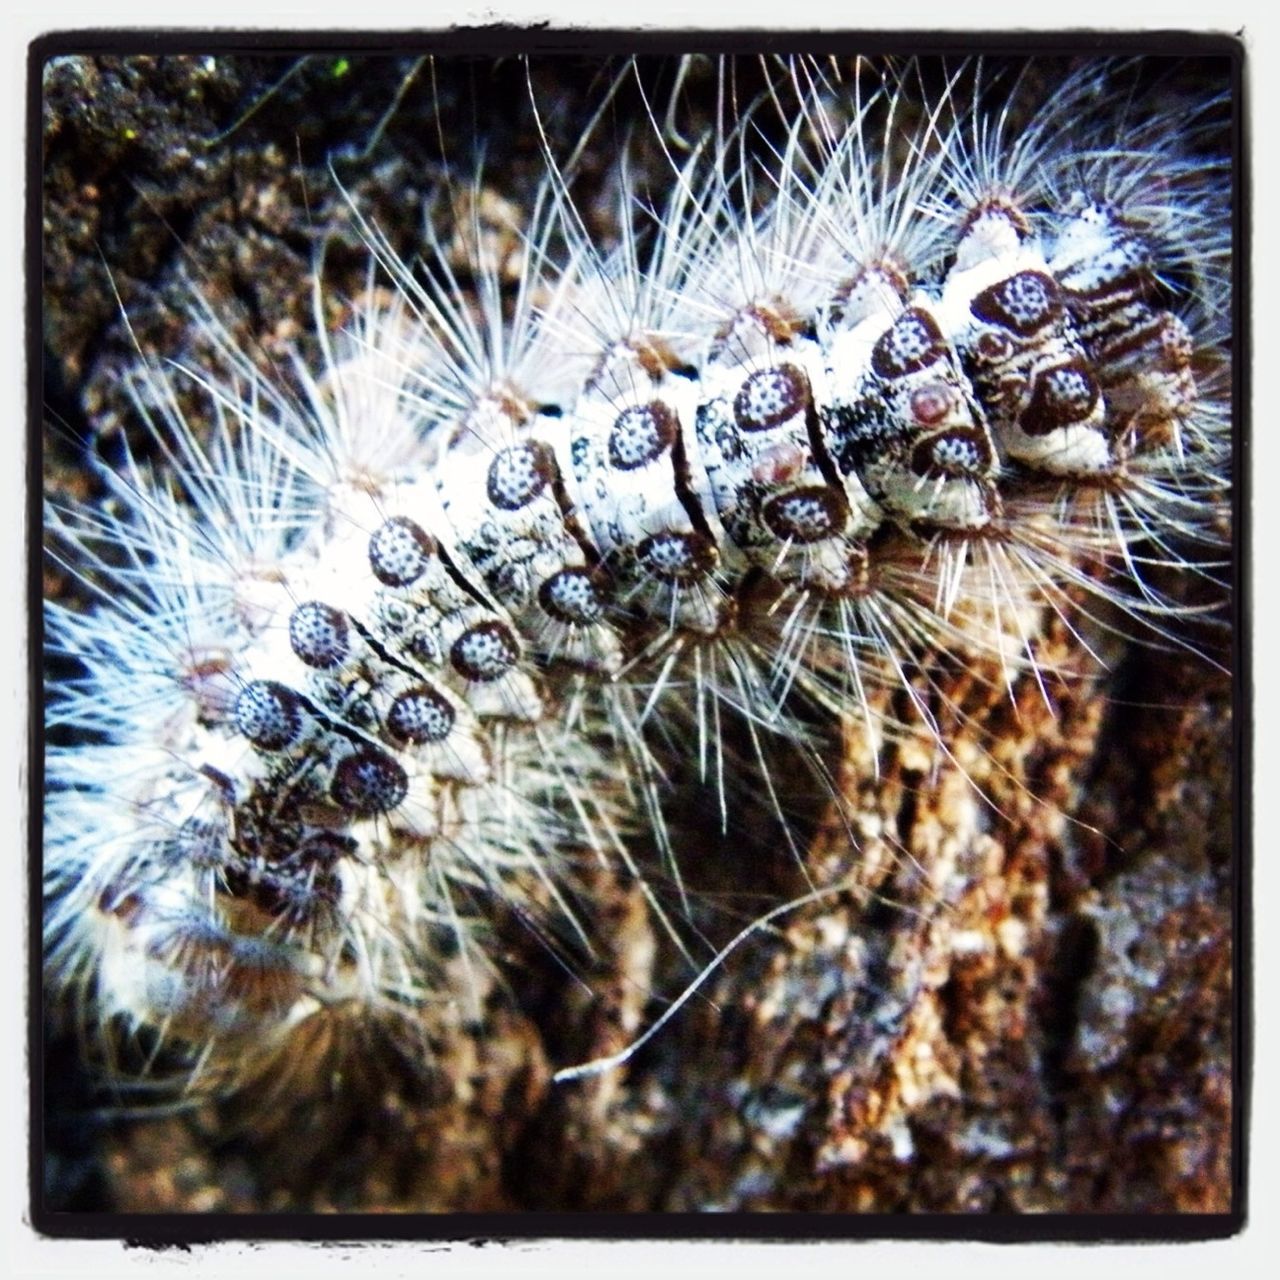 Hairy Caterpillar! #nature#garden#macro